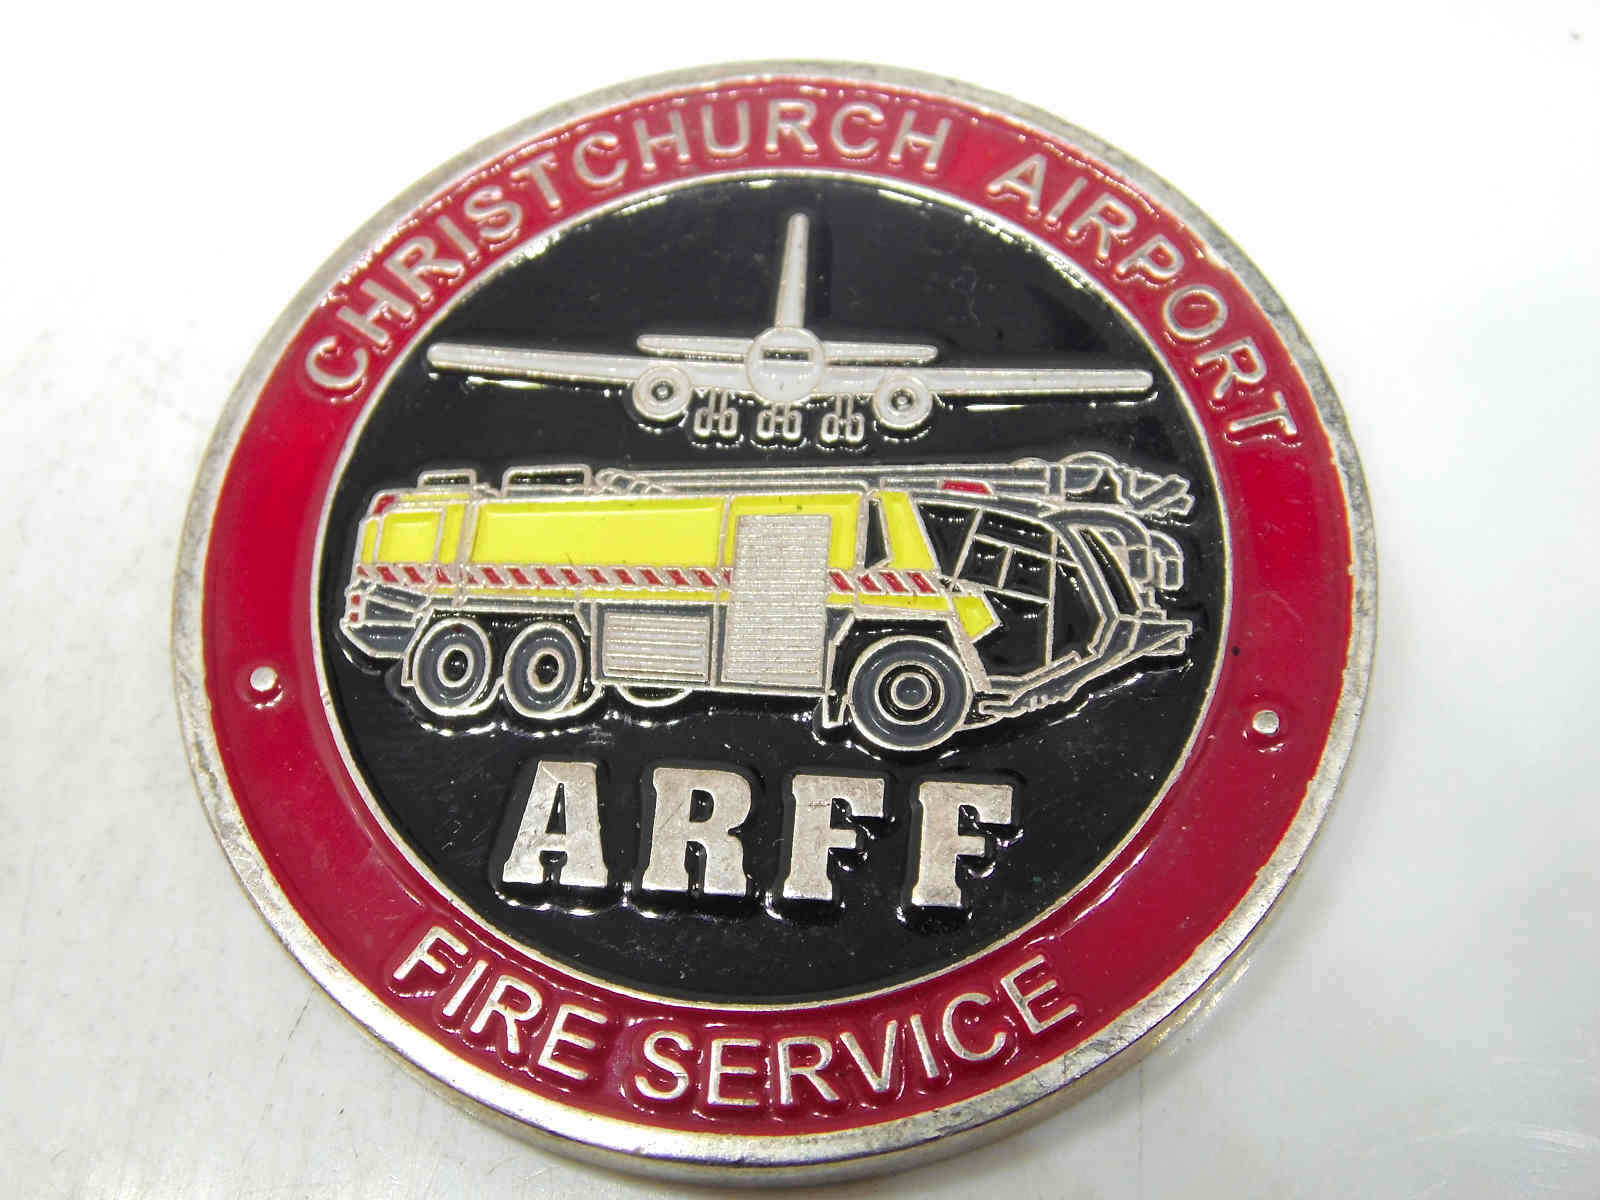 ARFF CHRISTCHURCH AIRPORT FIRE SERVICE CHALLENGE COIN